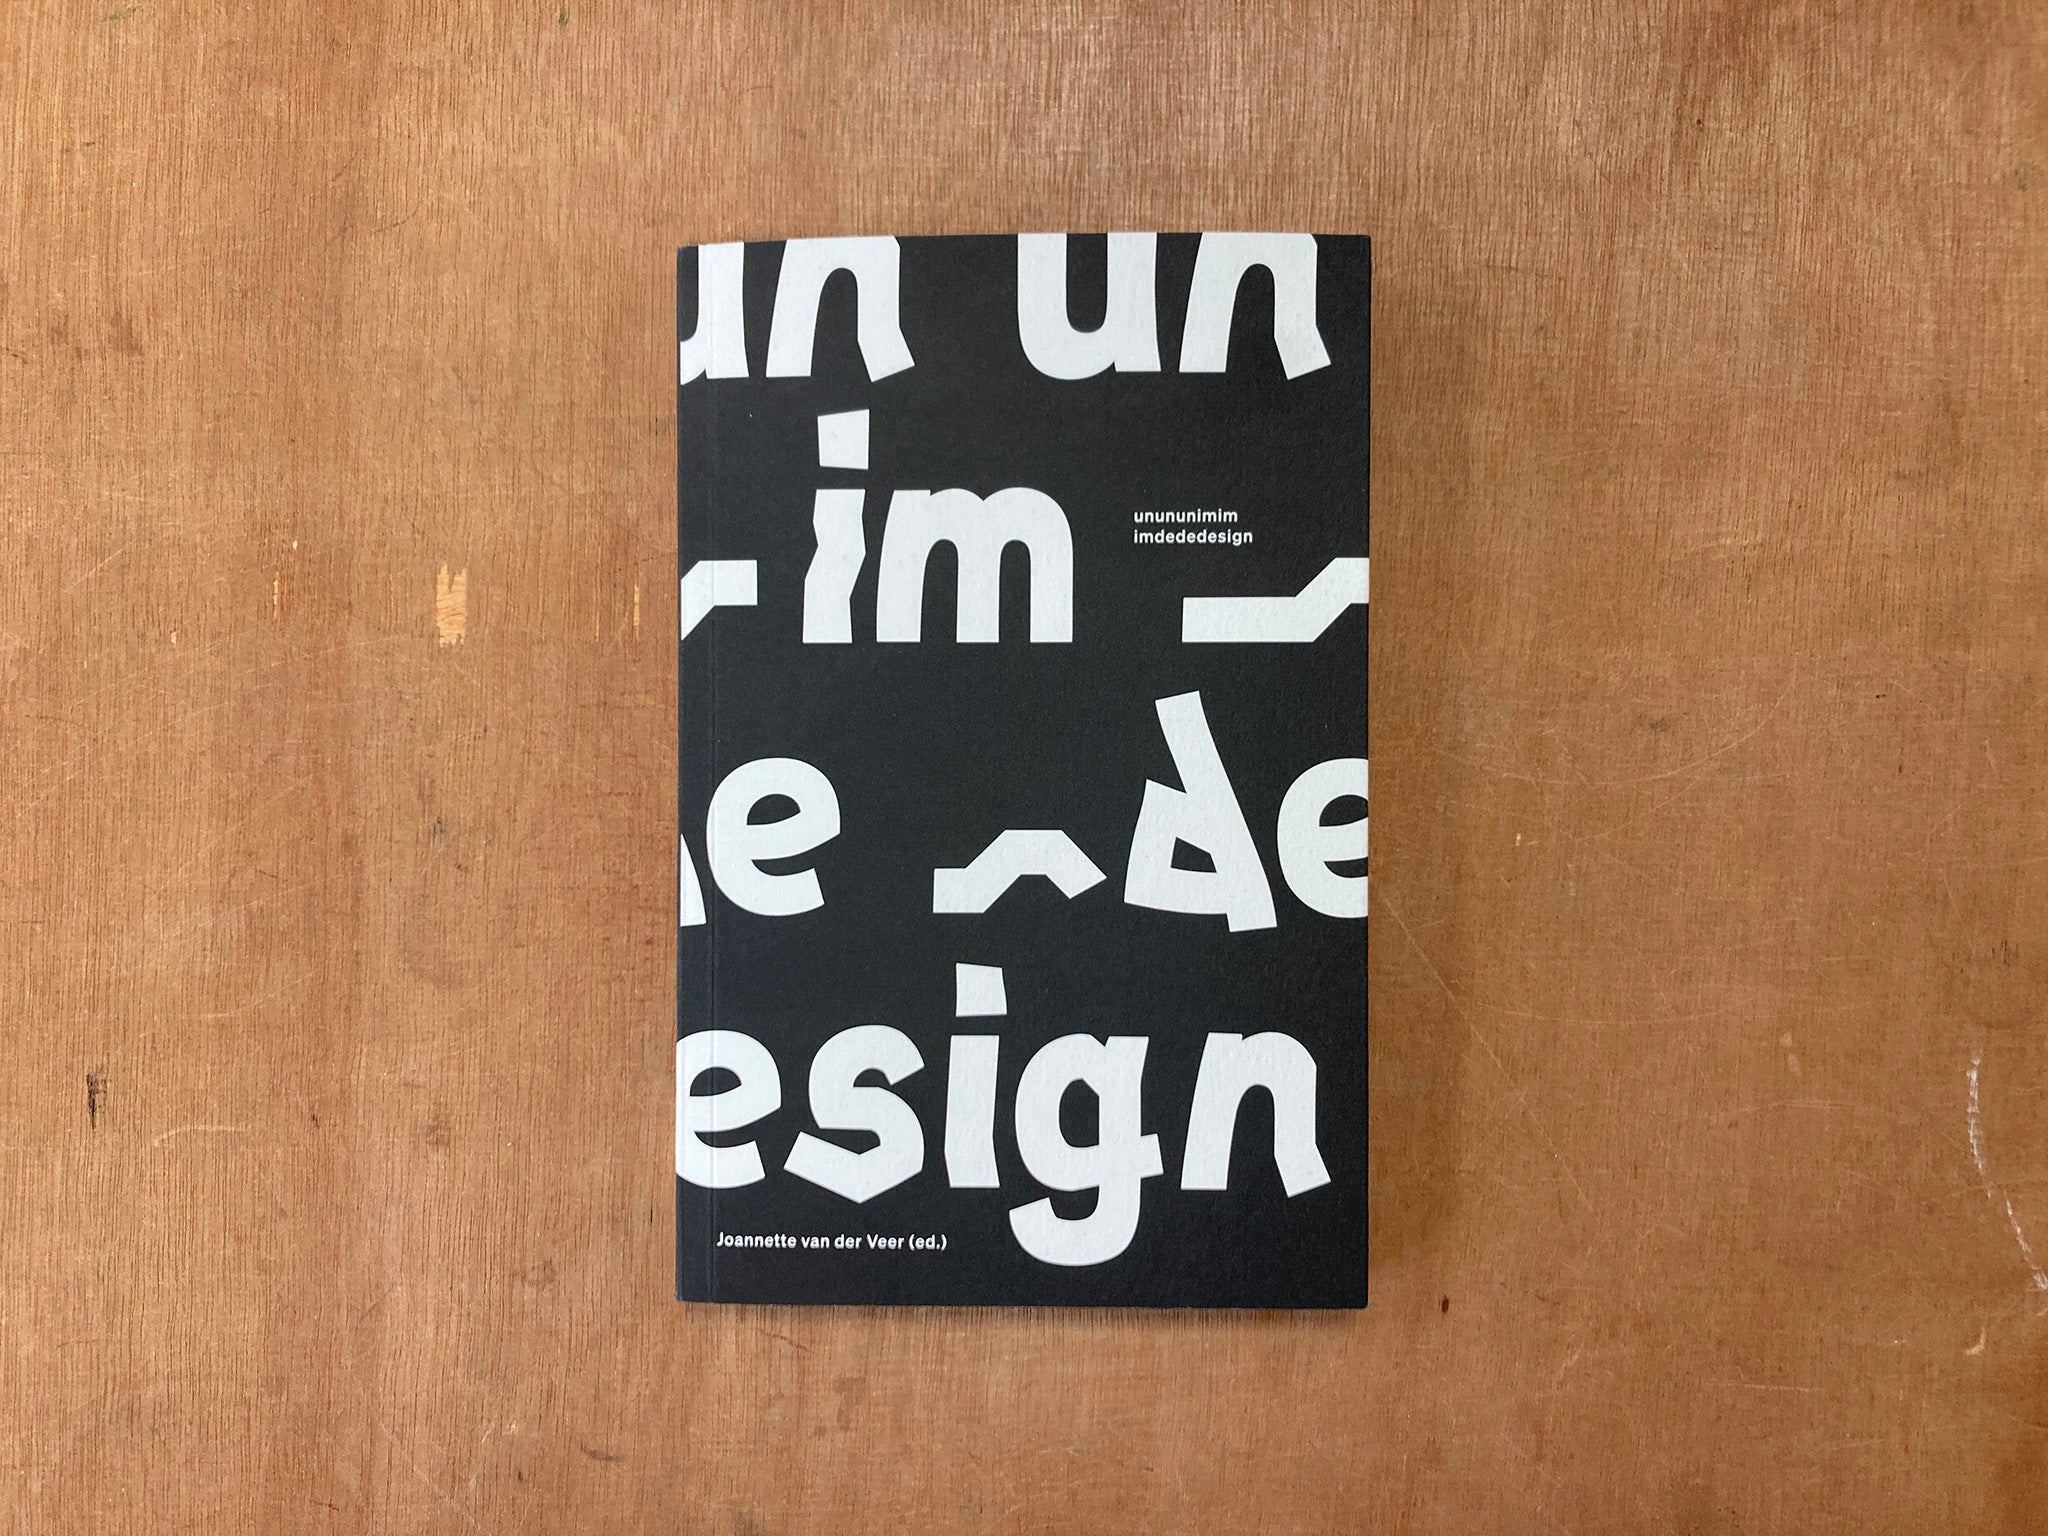 UNUNUNIMIMIMDEDEDESIGN, THE HESITANT STATE OF DESIGN by Joannette van der Veer